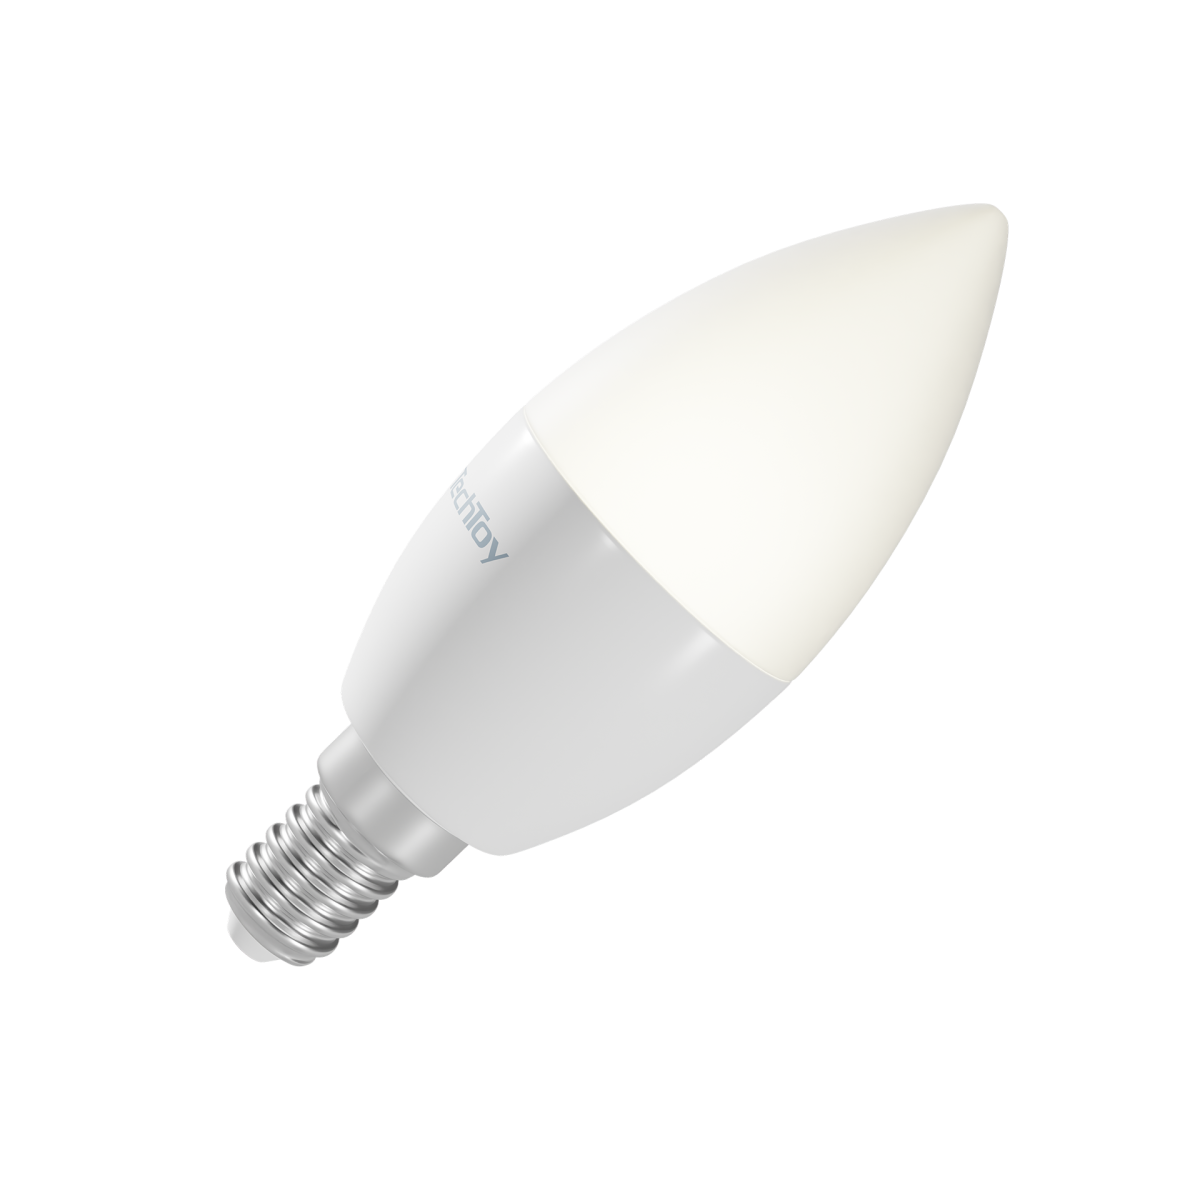 TechToy Smart Bulb RGB 4,5W E14